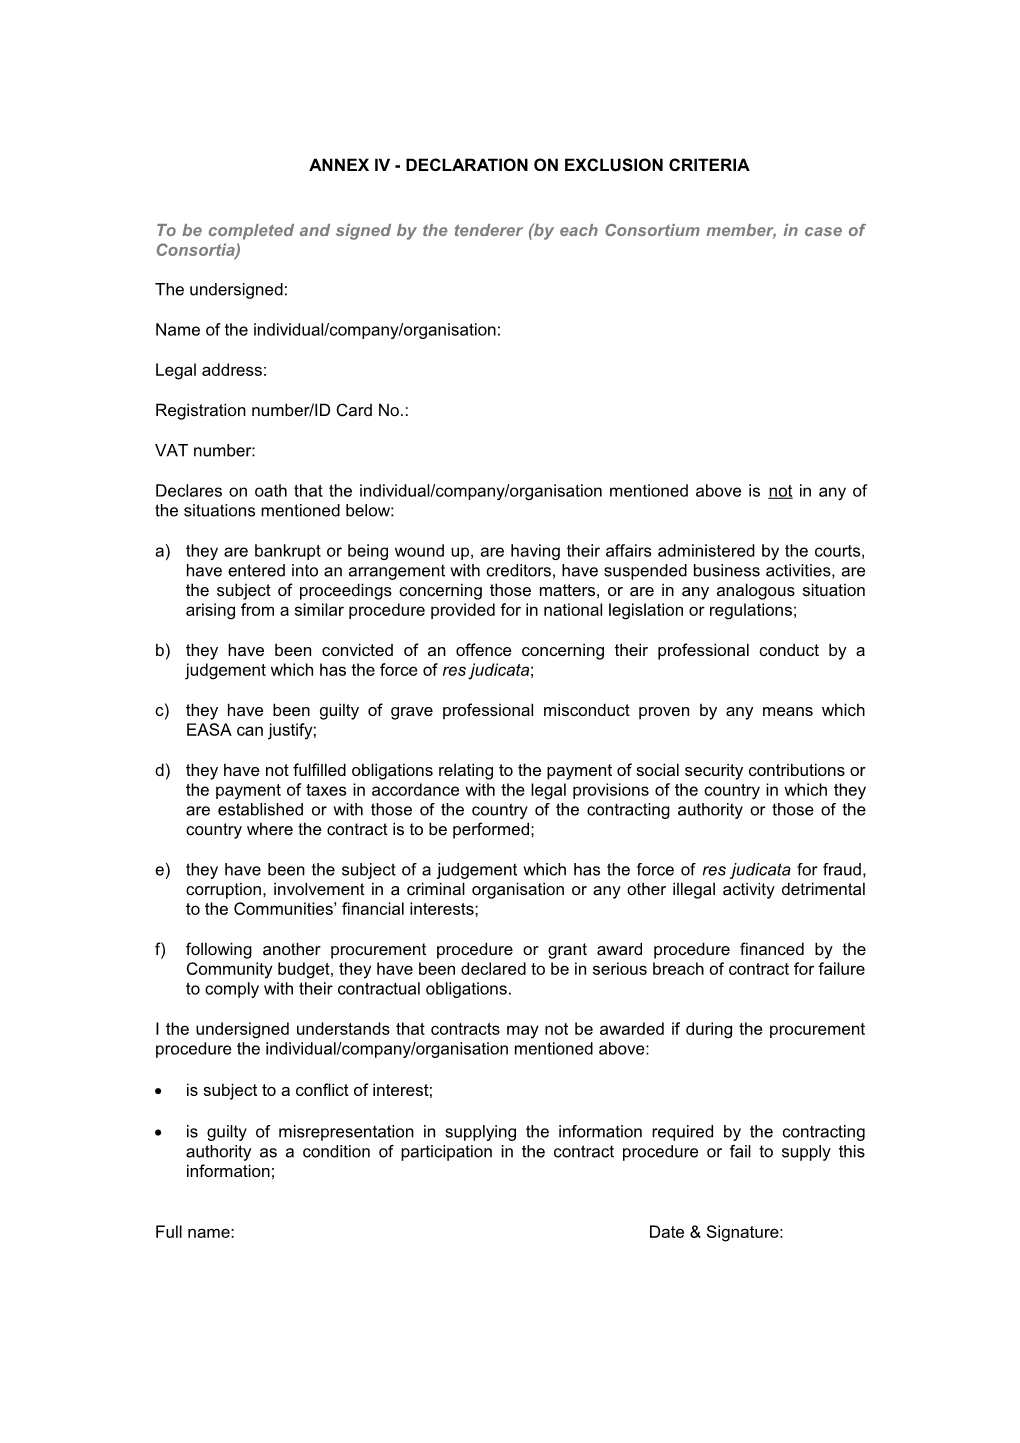 Annex Iv - Declaration on Exclusion Criteria